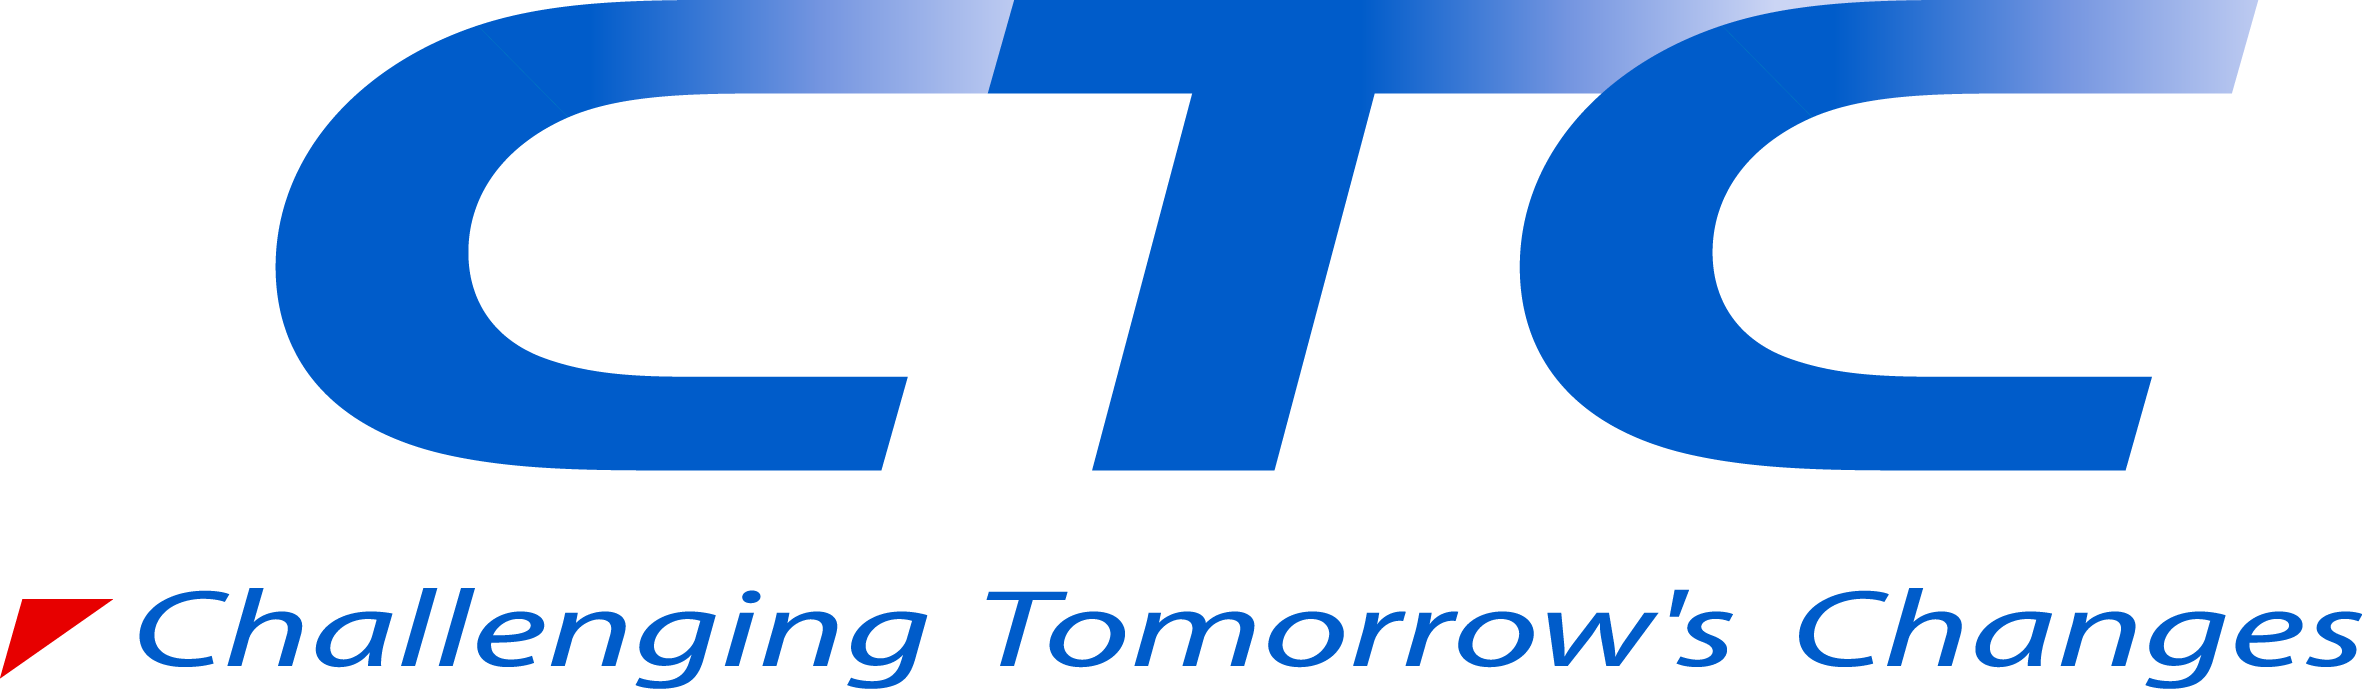 CTC企業ロゴ